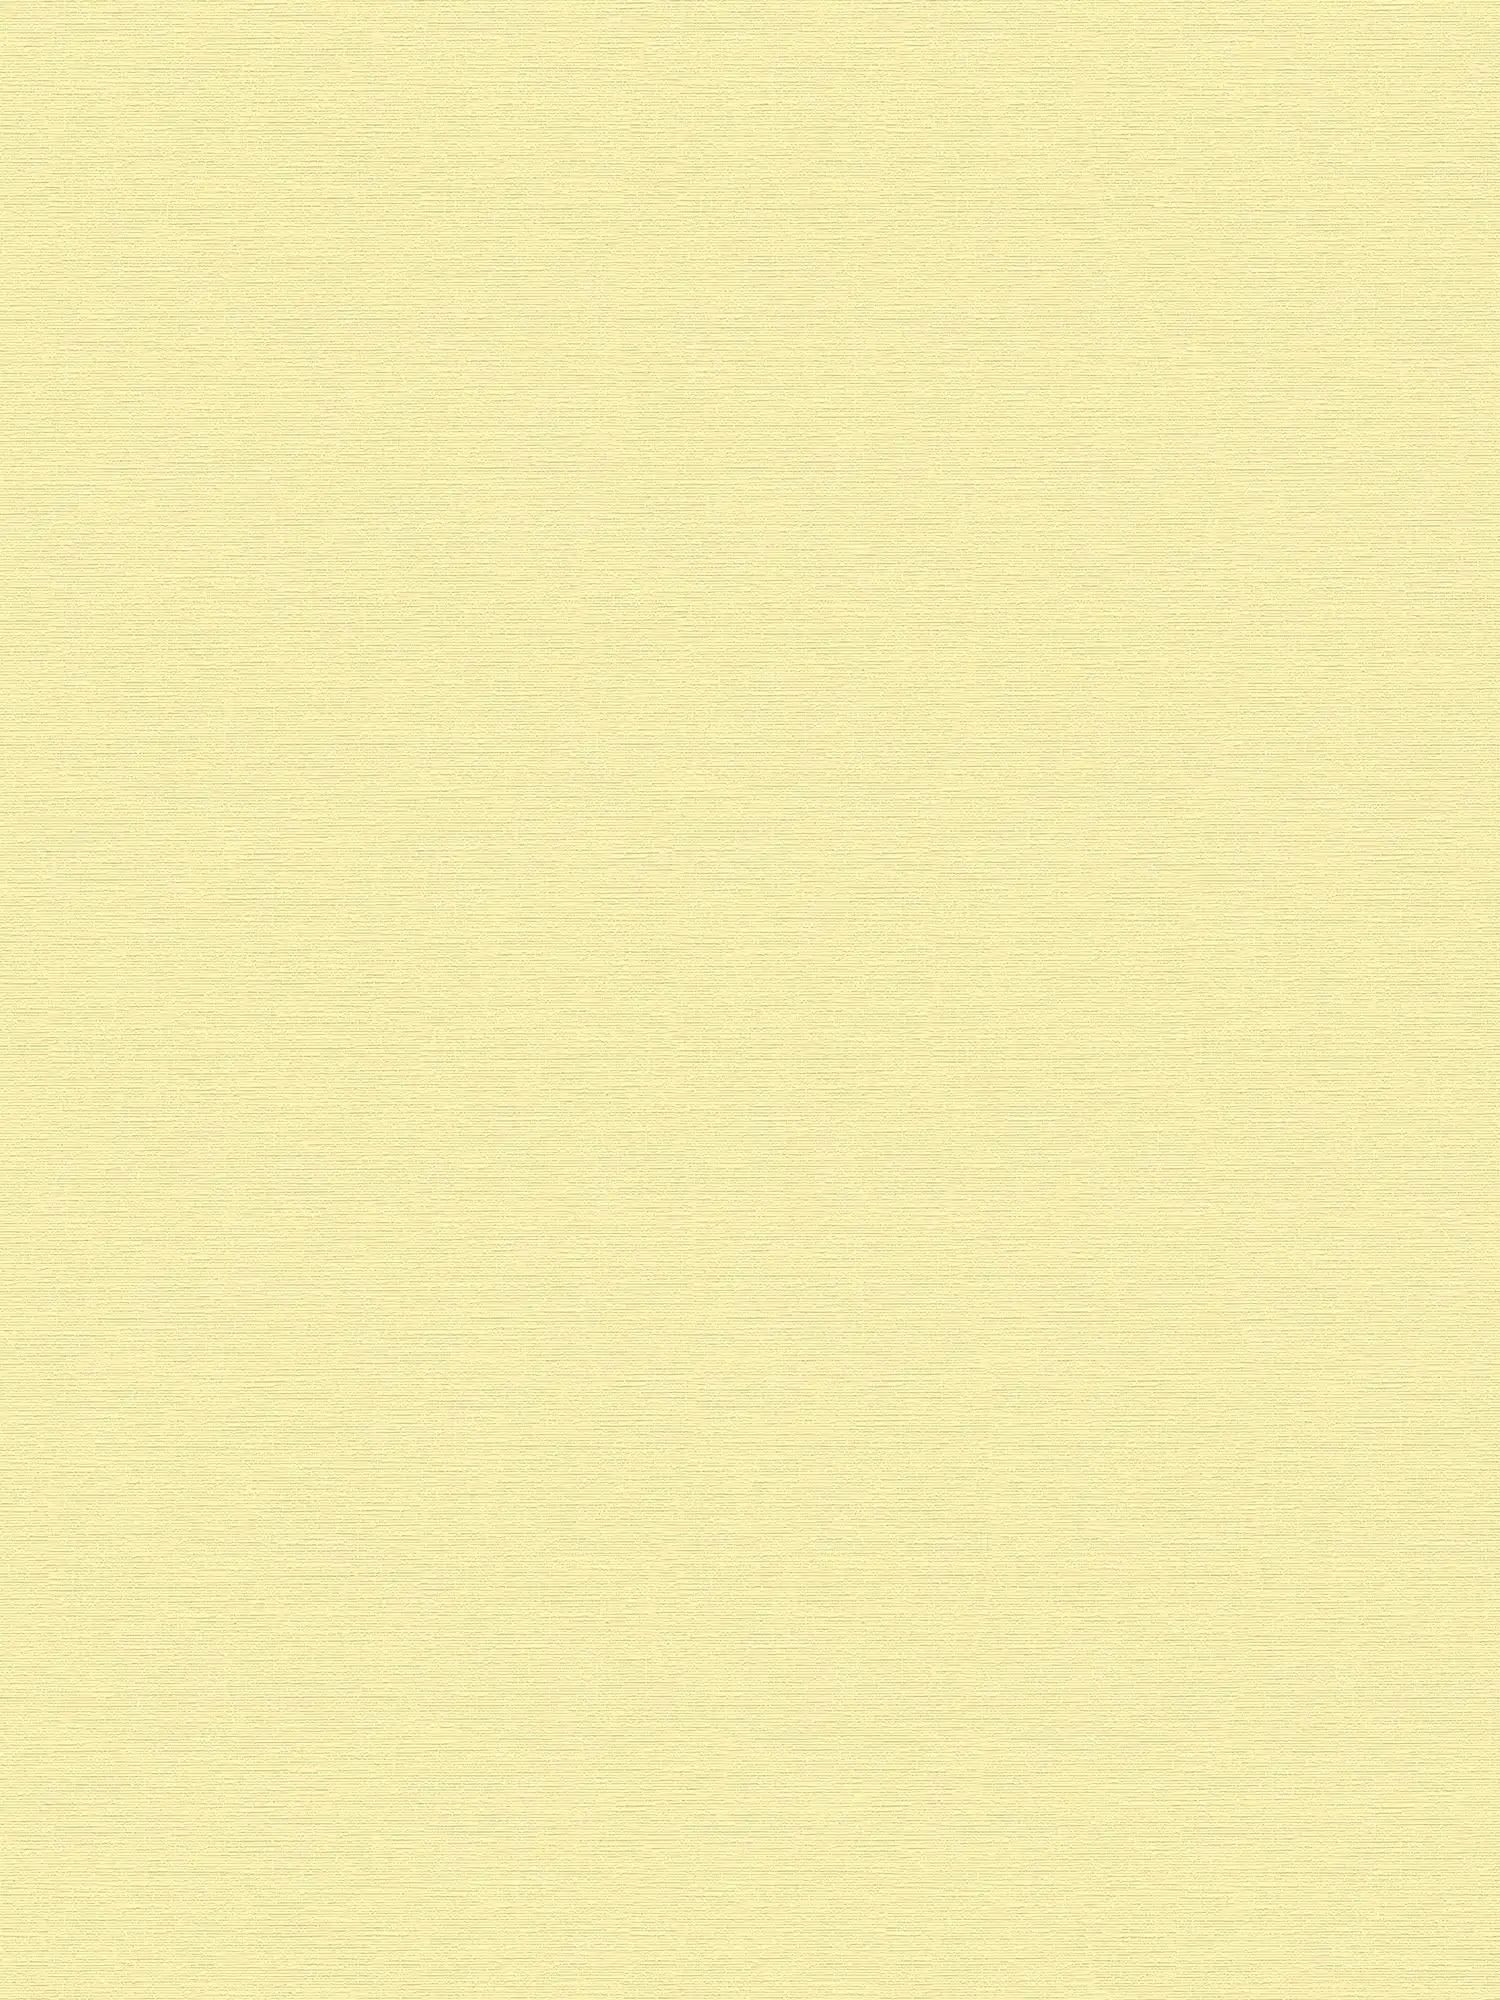 Pastel wallpaper yellow plain with textile texture
